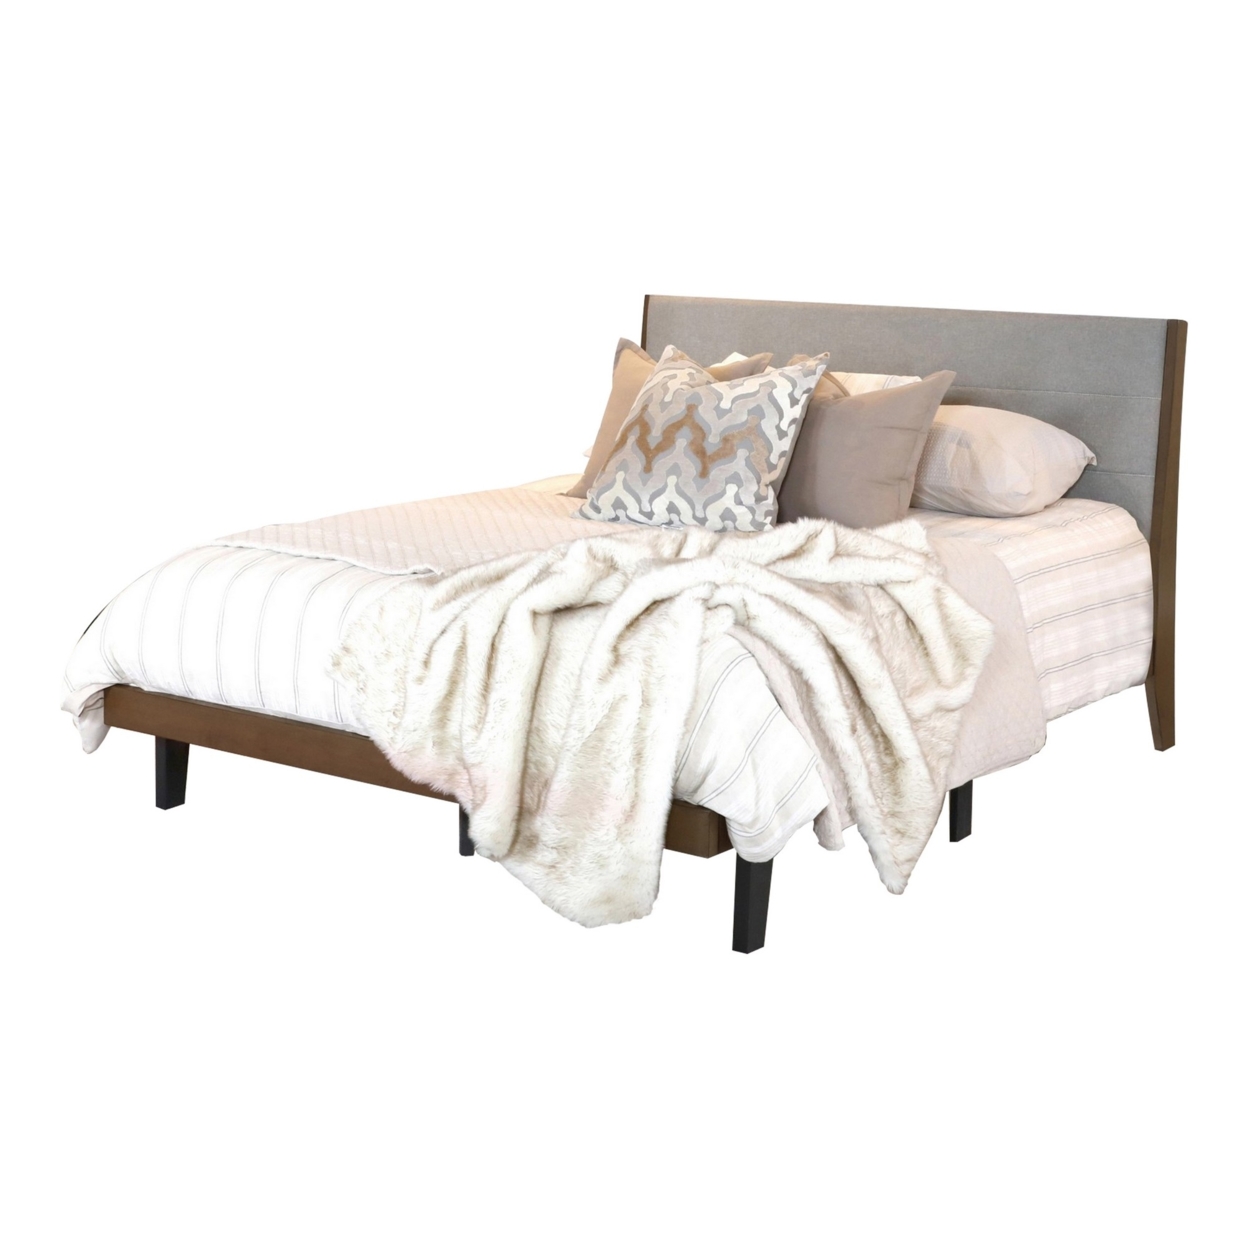 Vee Queen Size Platform Bed, Modern Low Profile Angled Legs, Natural Brown- Saltoro Sherpi